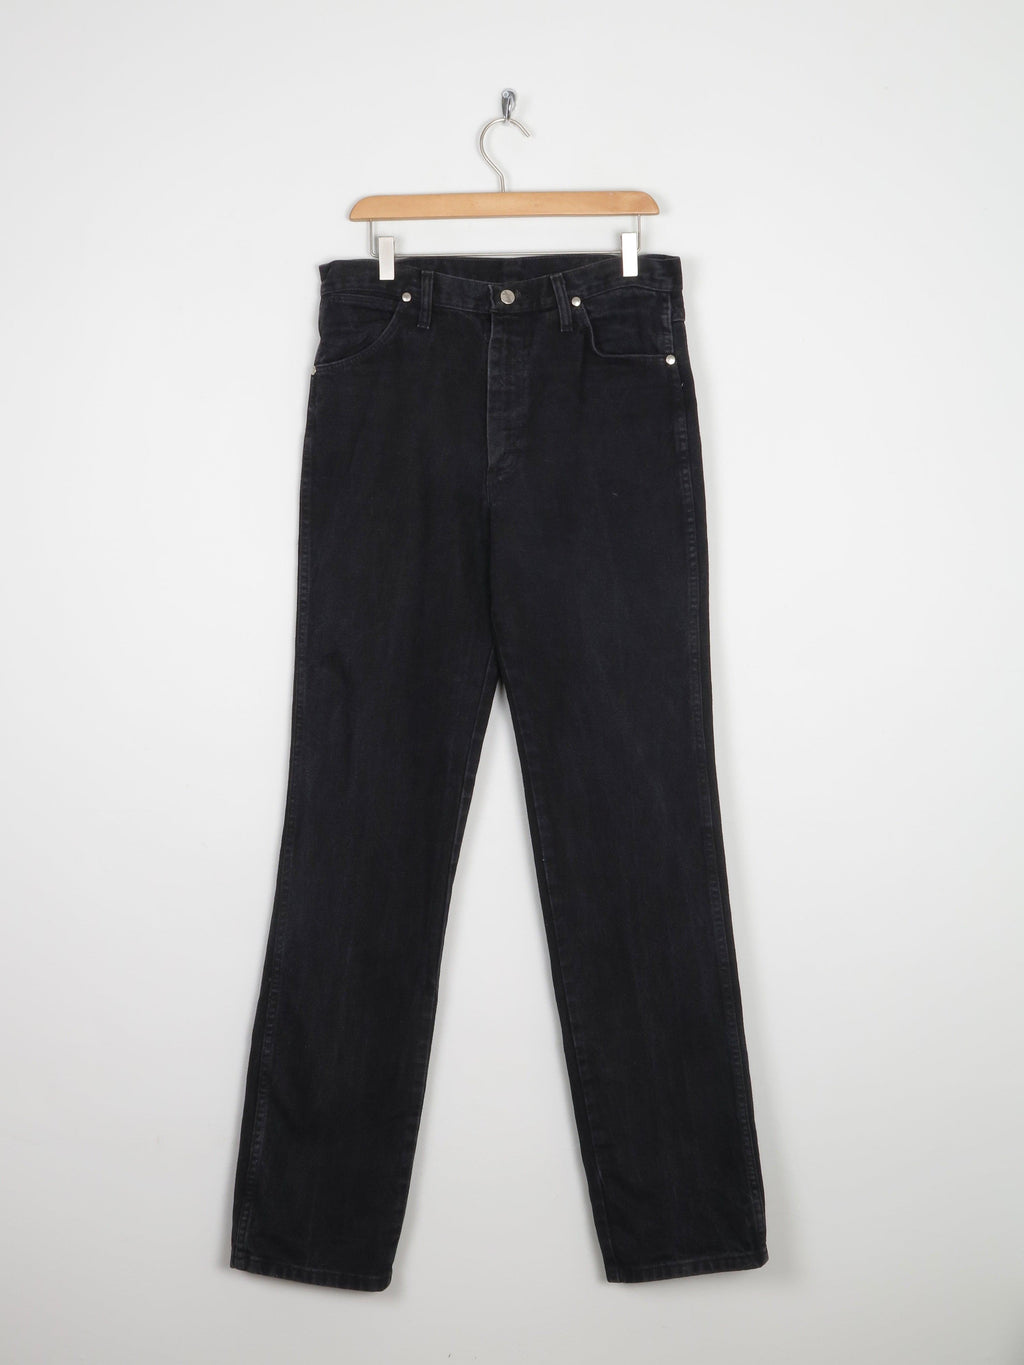 Vintage Wrangler Black Denim Jeans 30/34 - The Harlequin